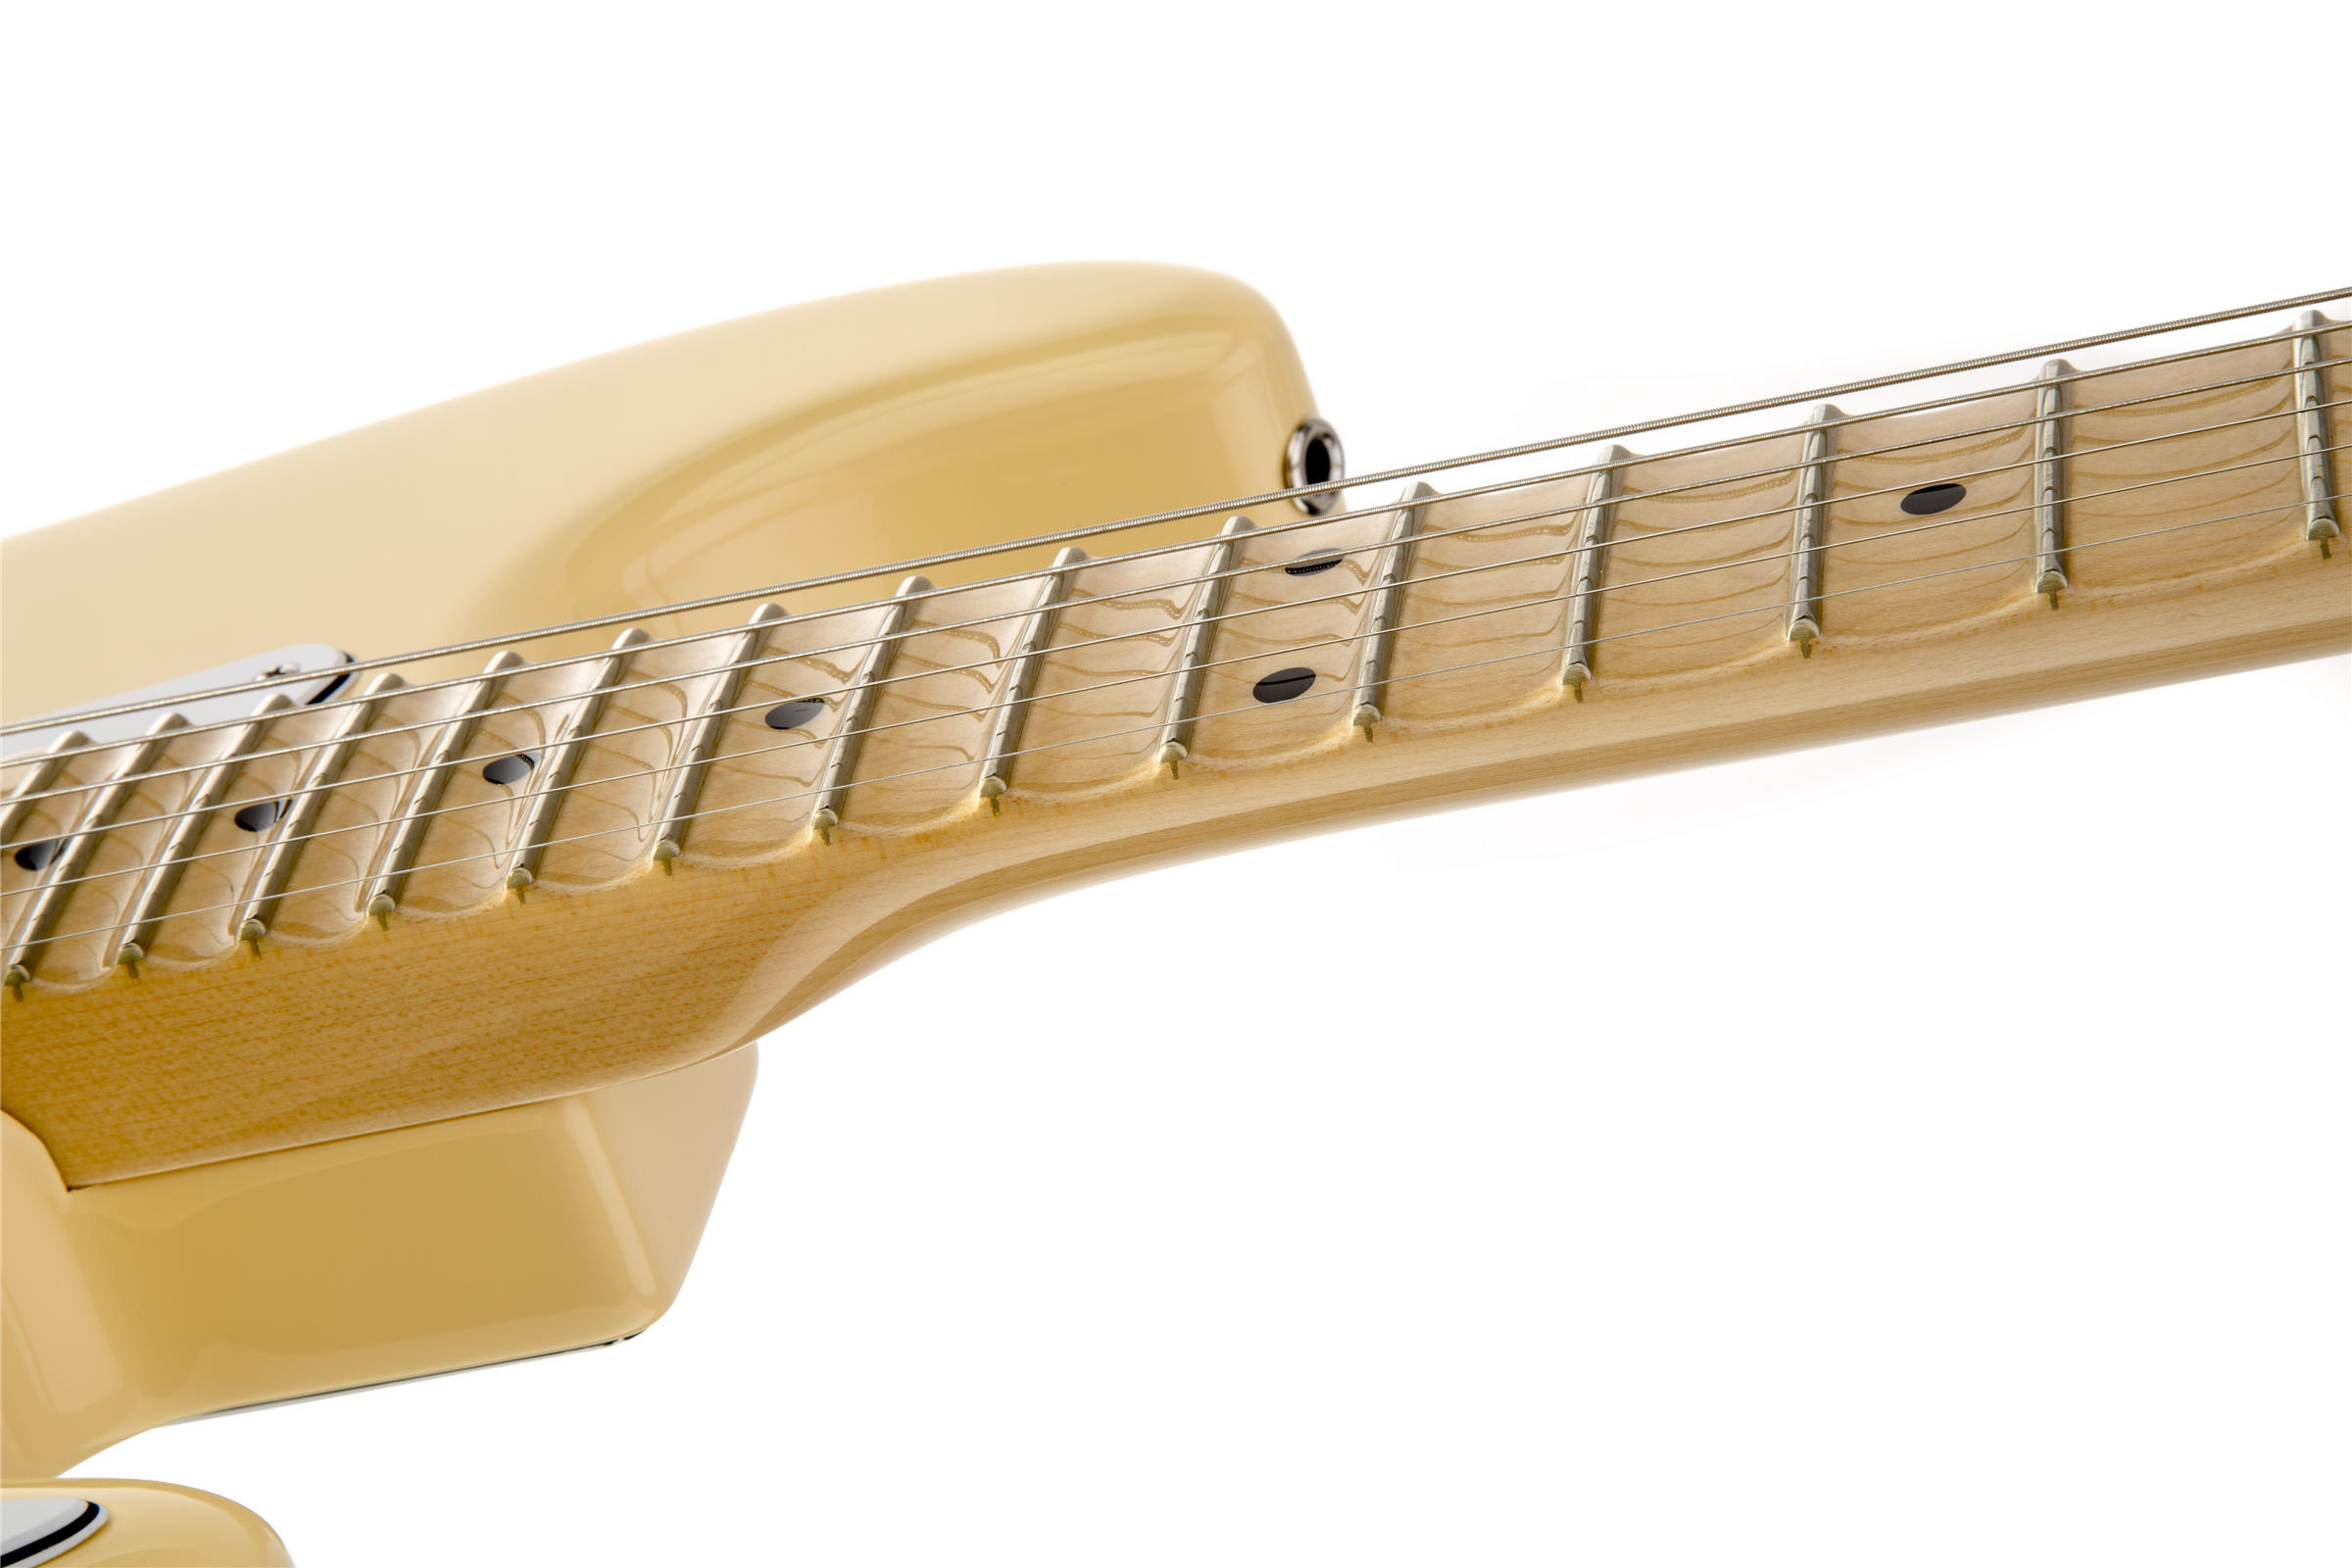 Yngwie Malmsteen Stratocaster Scalloped Maple Fingerboard, Vintage White追加画像